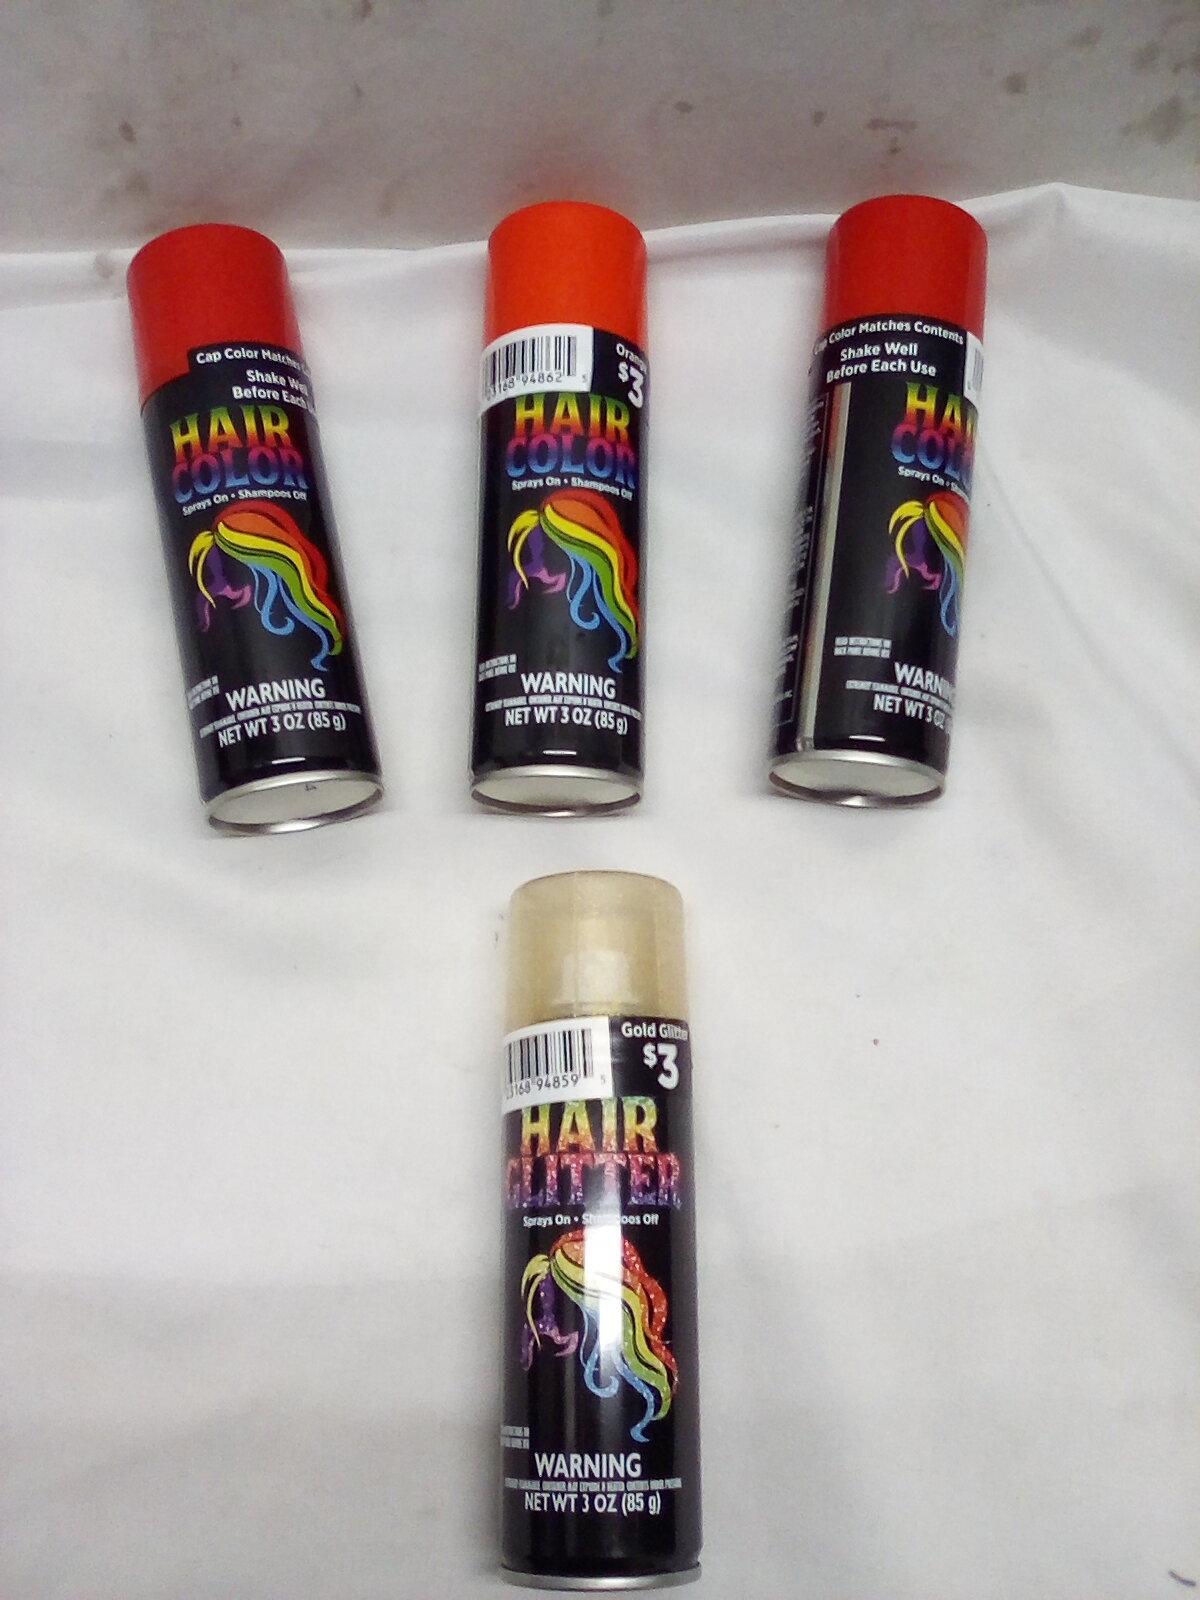 Hair Color & Glitter Spray. Qty 2 Red, Qty 1 Orange, & Qty 1 Gold Glitter.